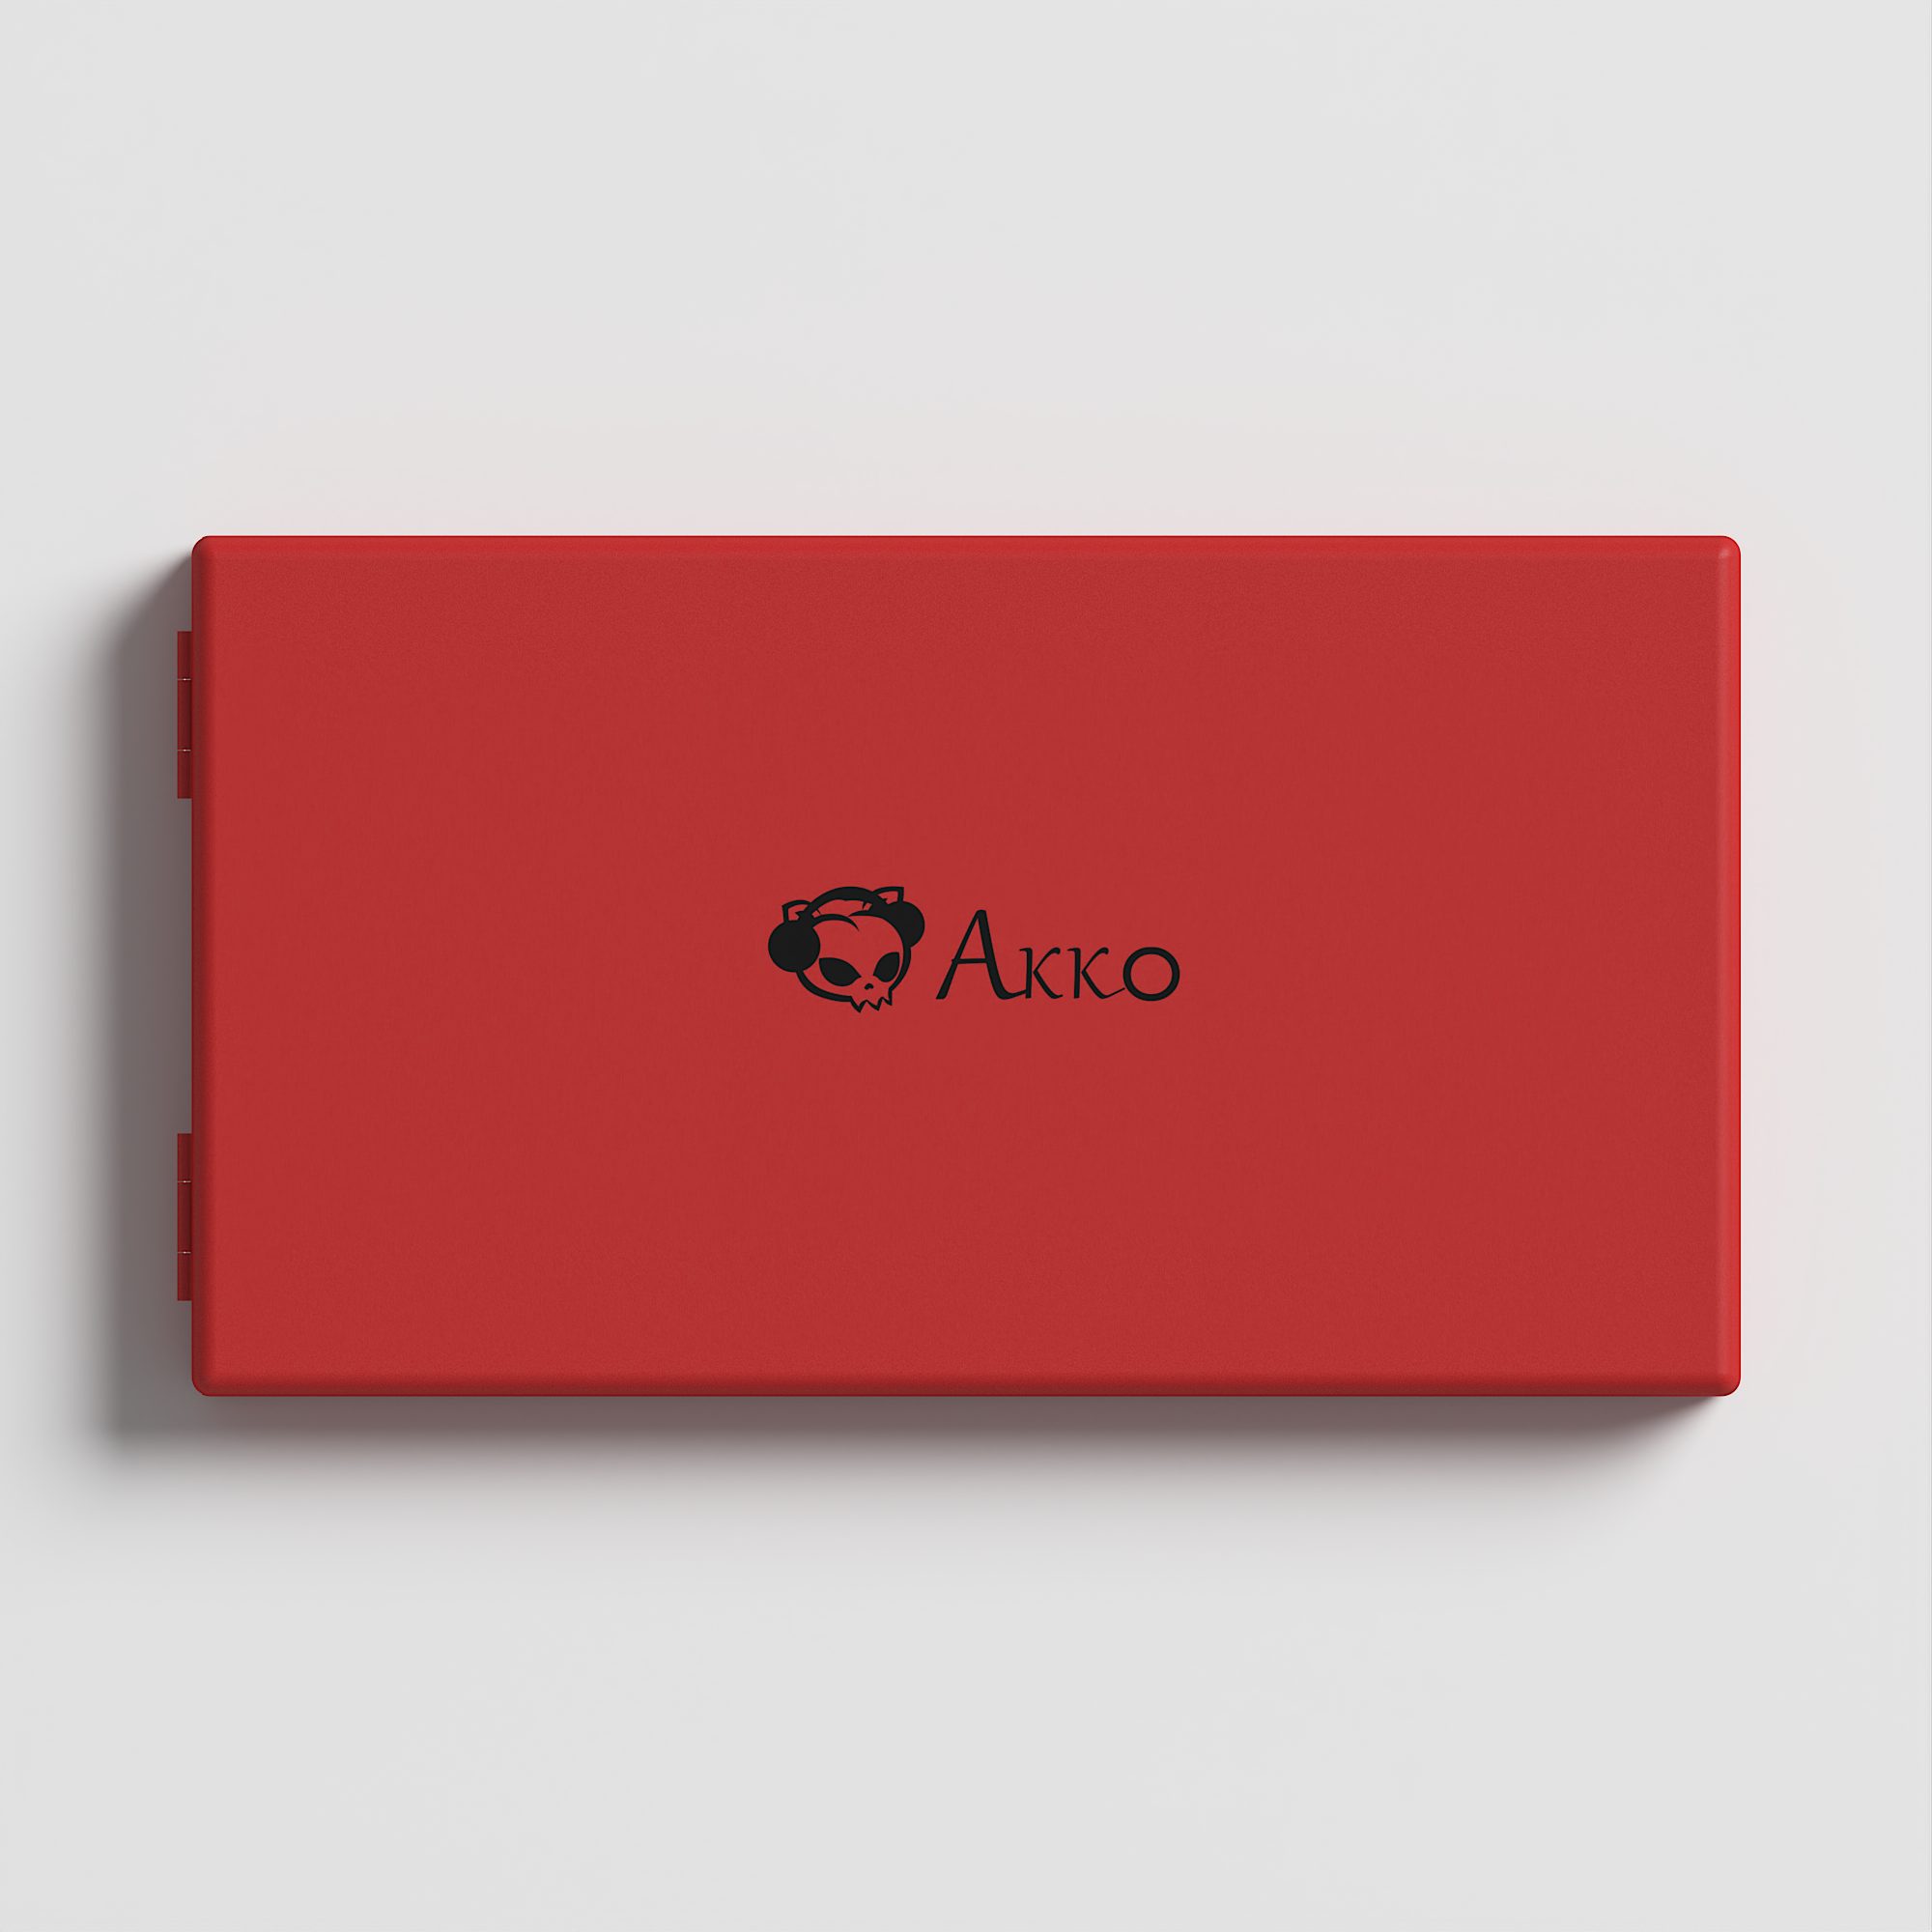 Akko Keycap Set Collection Box